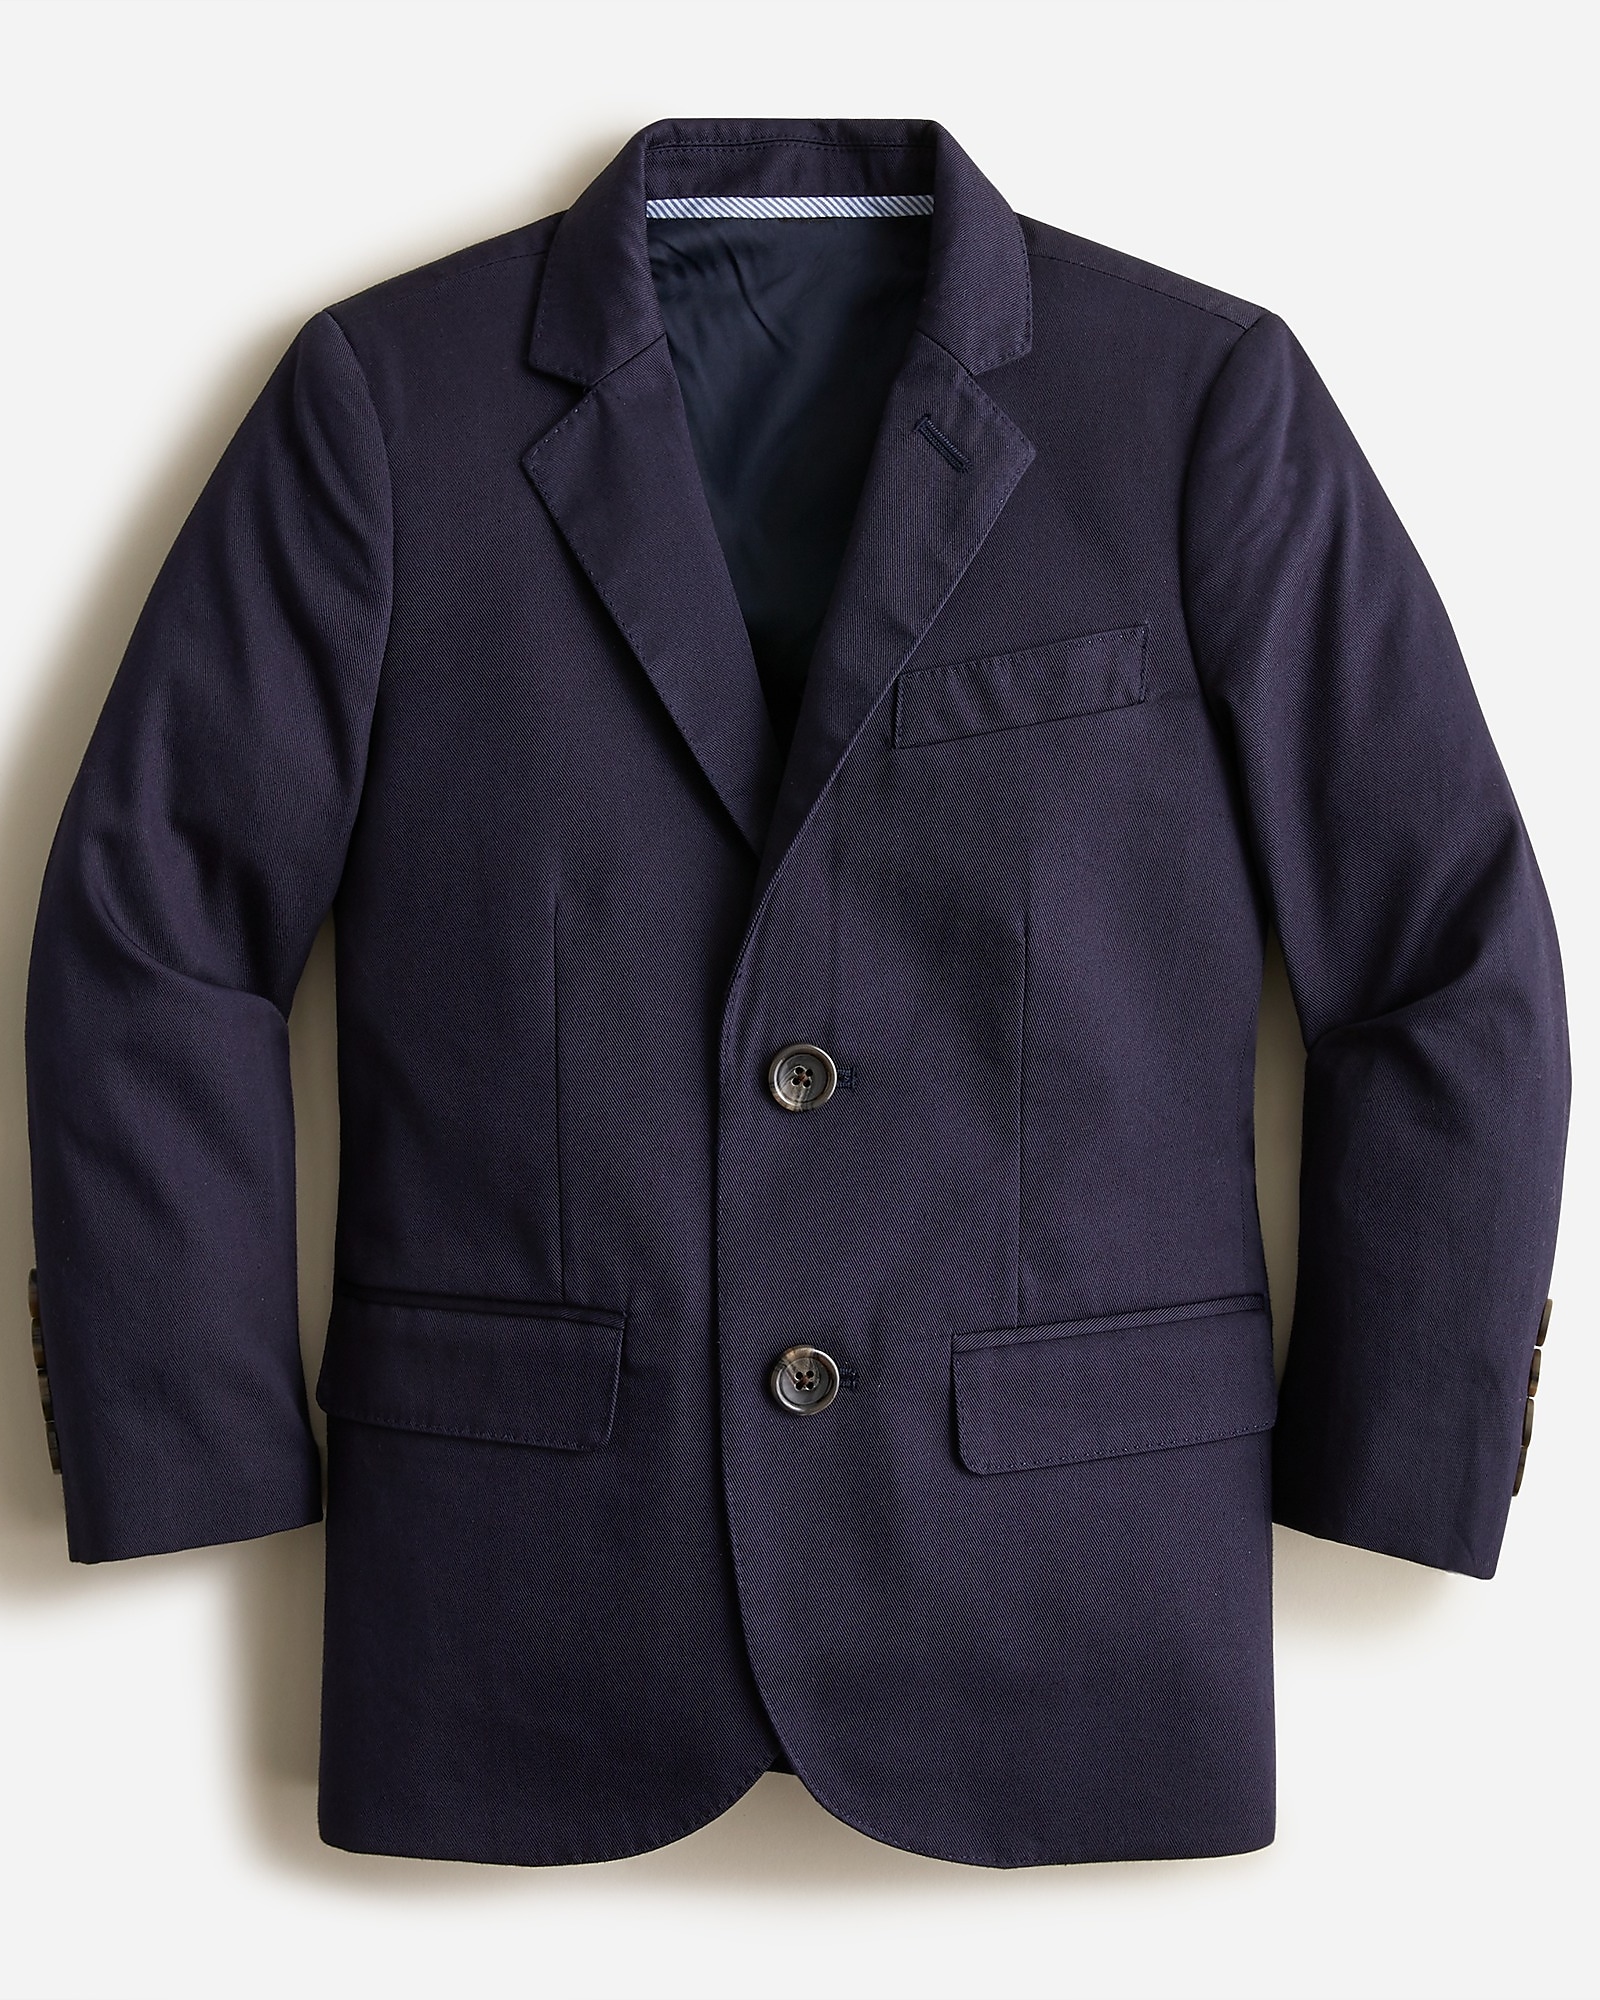 Boys' Ludlow suit jacket in Italian chino